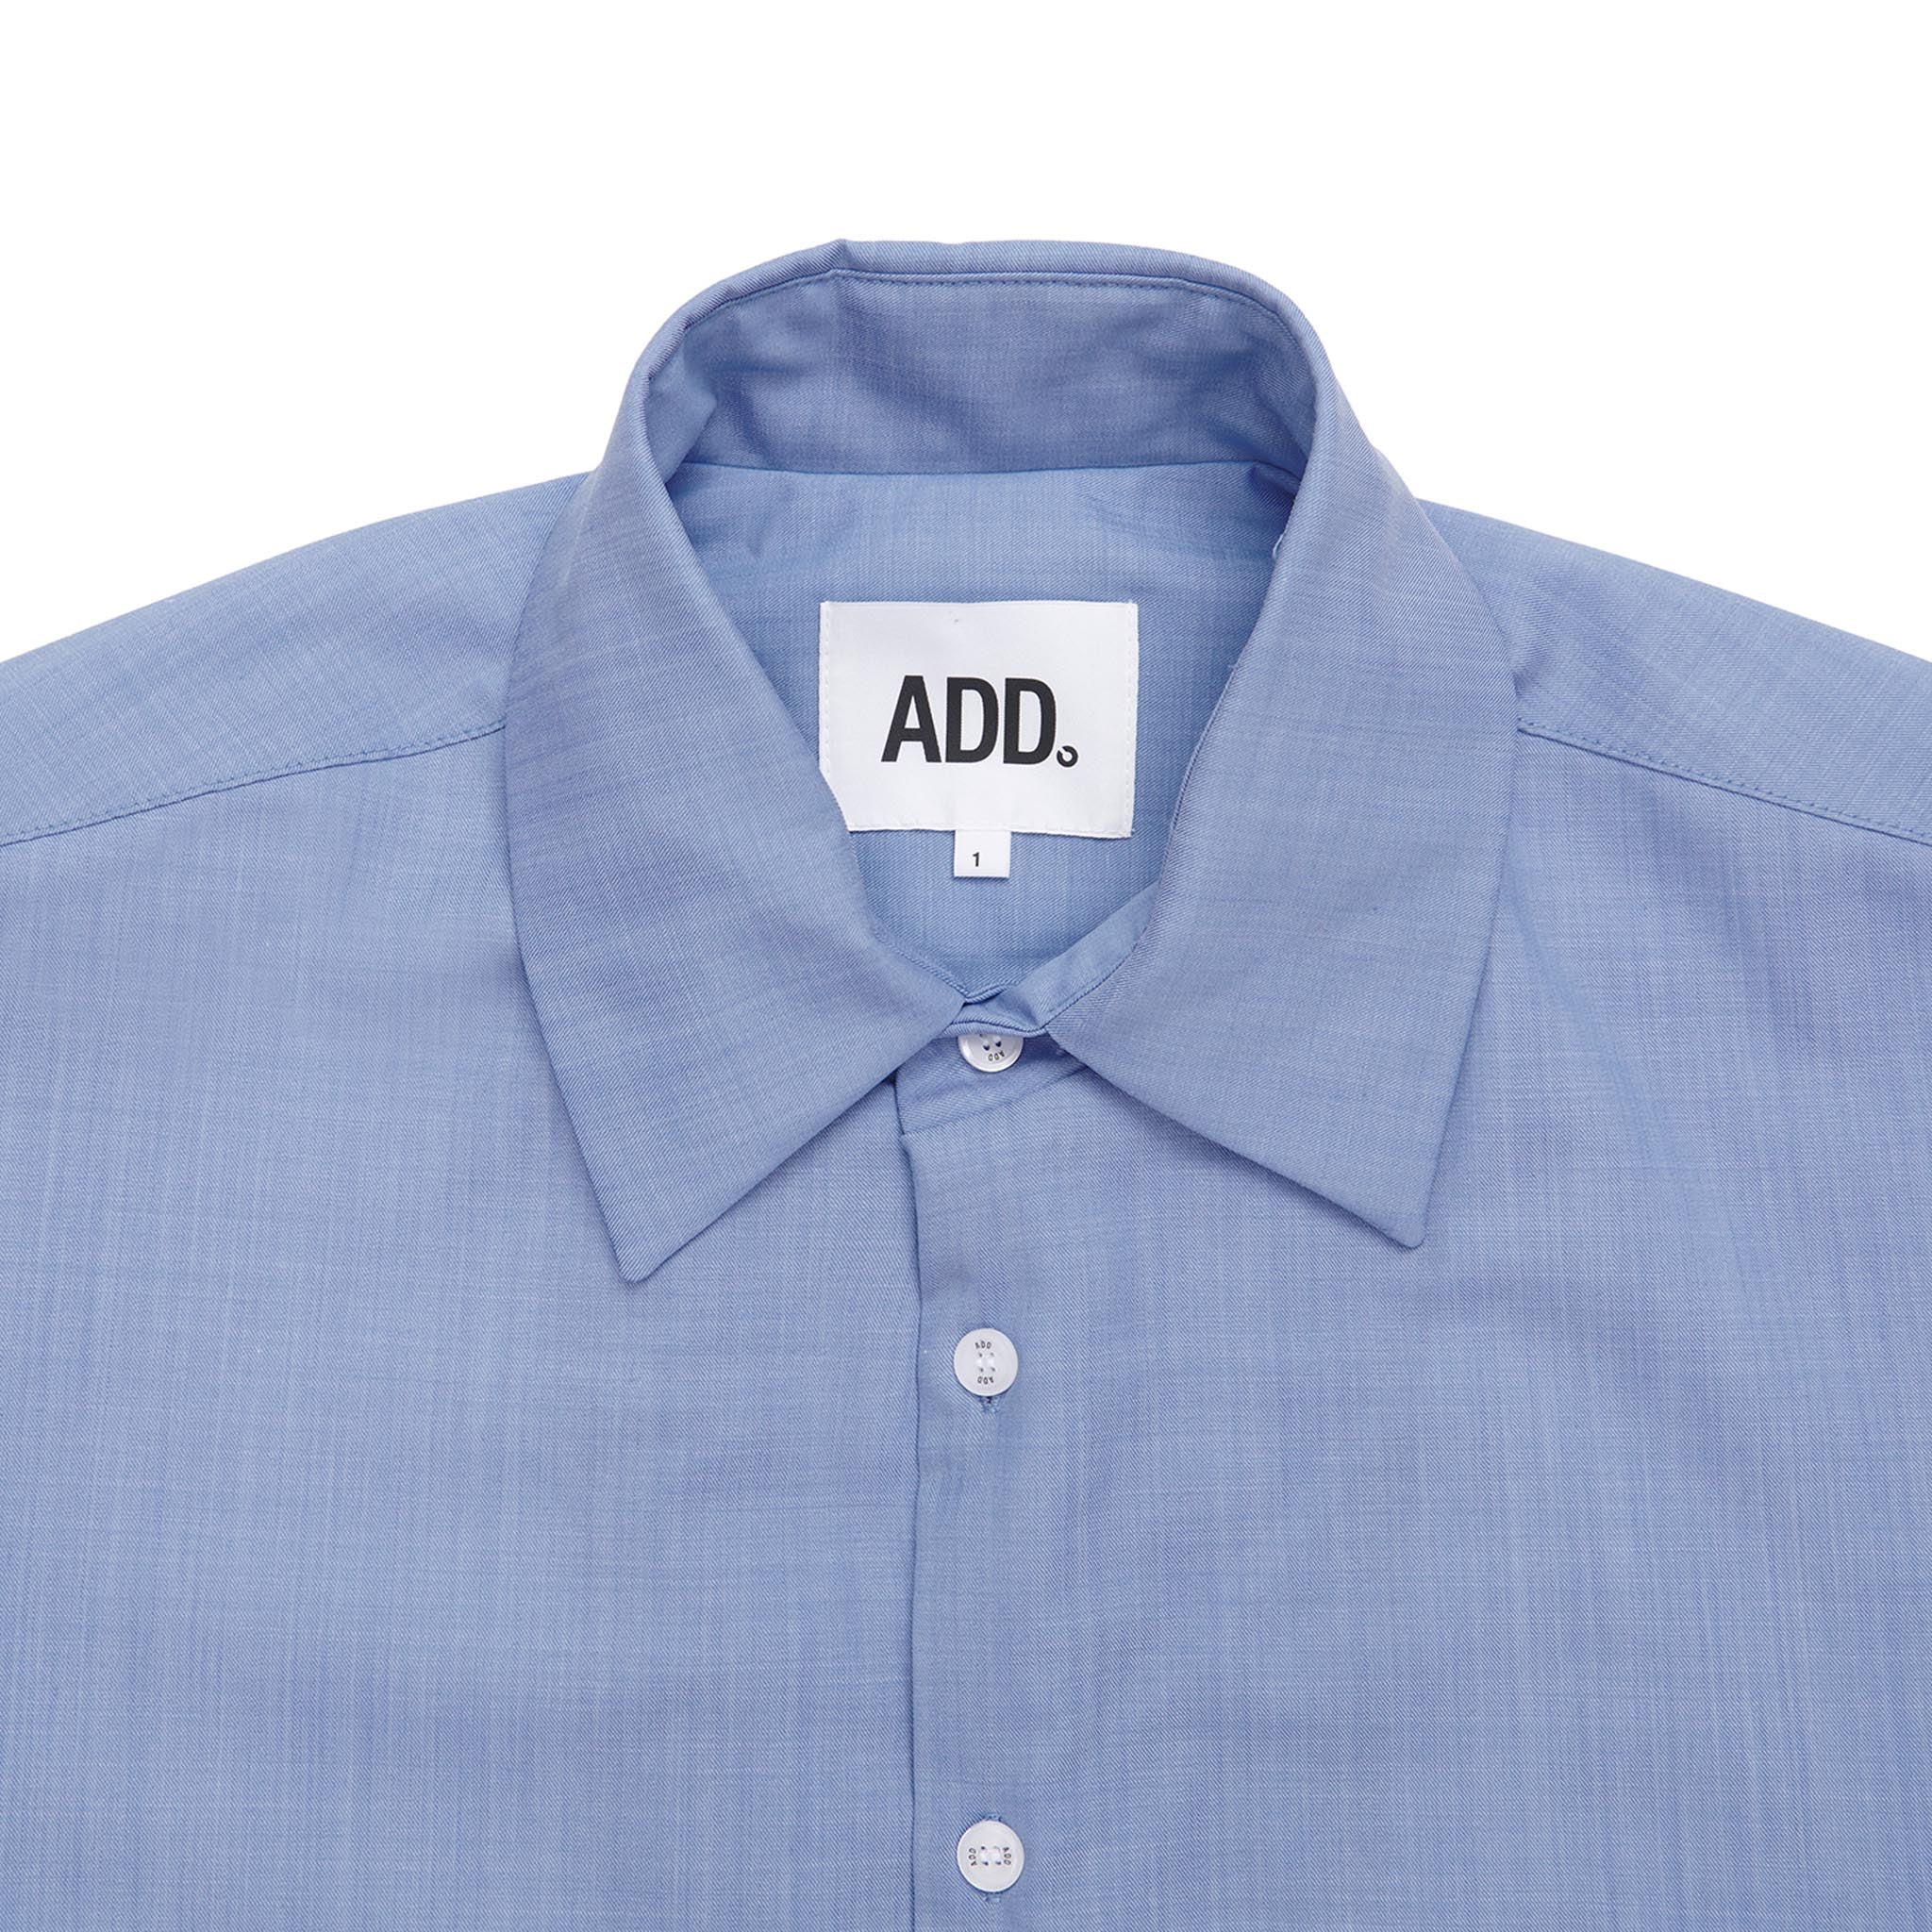 ADD Soft Padding Avantgarde Shirt Jacket Powder Blue